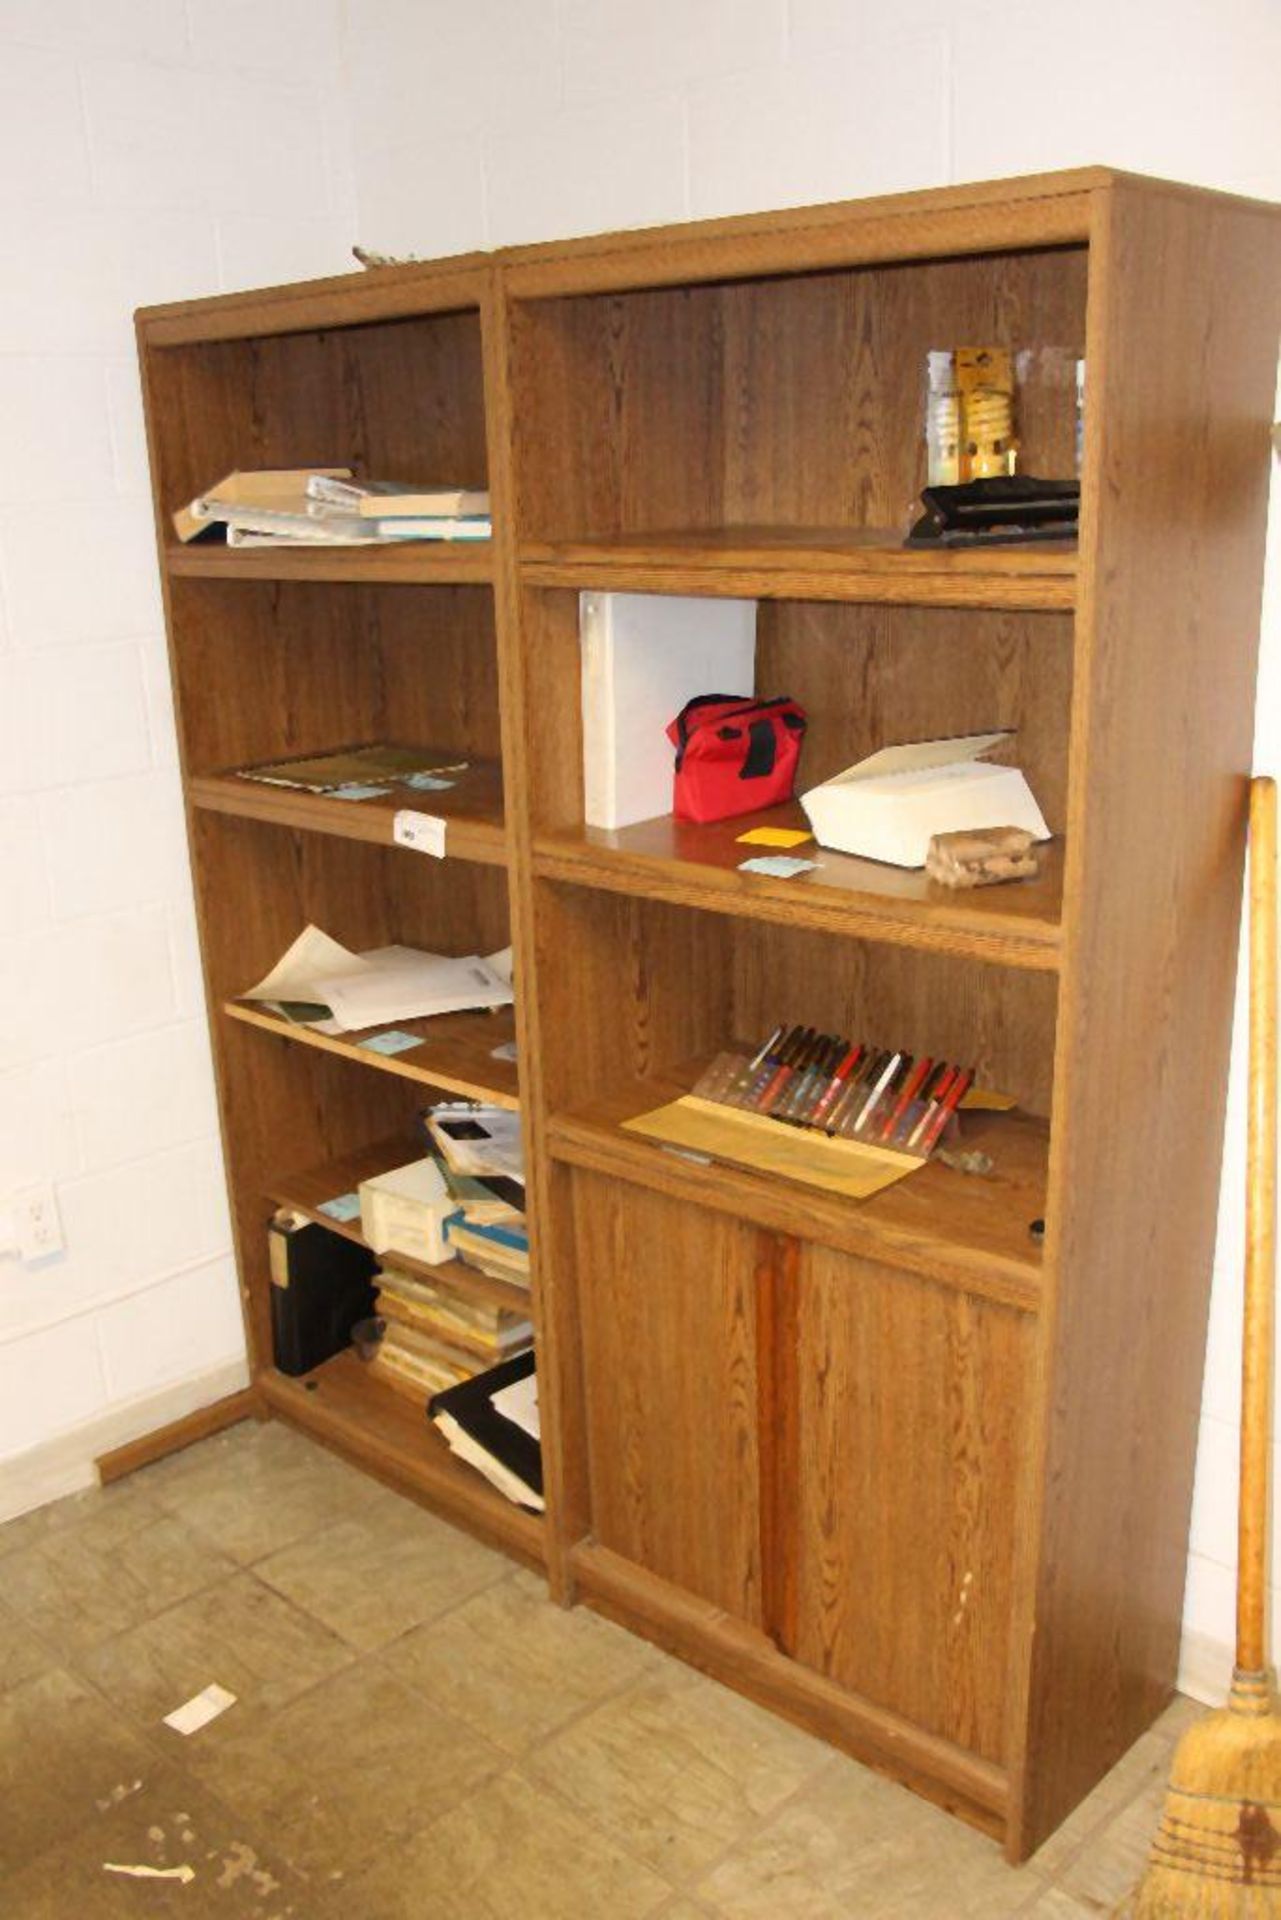 (2) bookcases